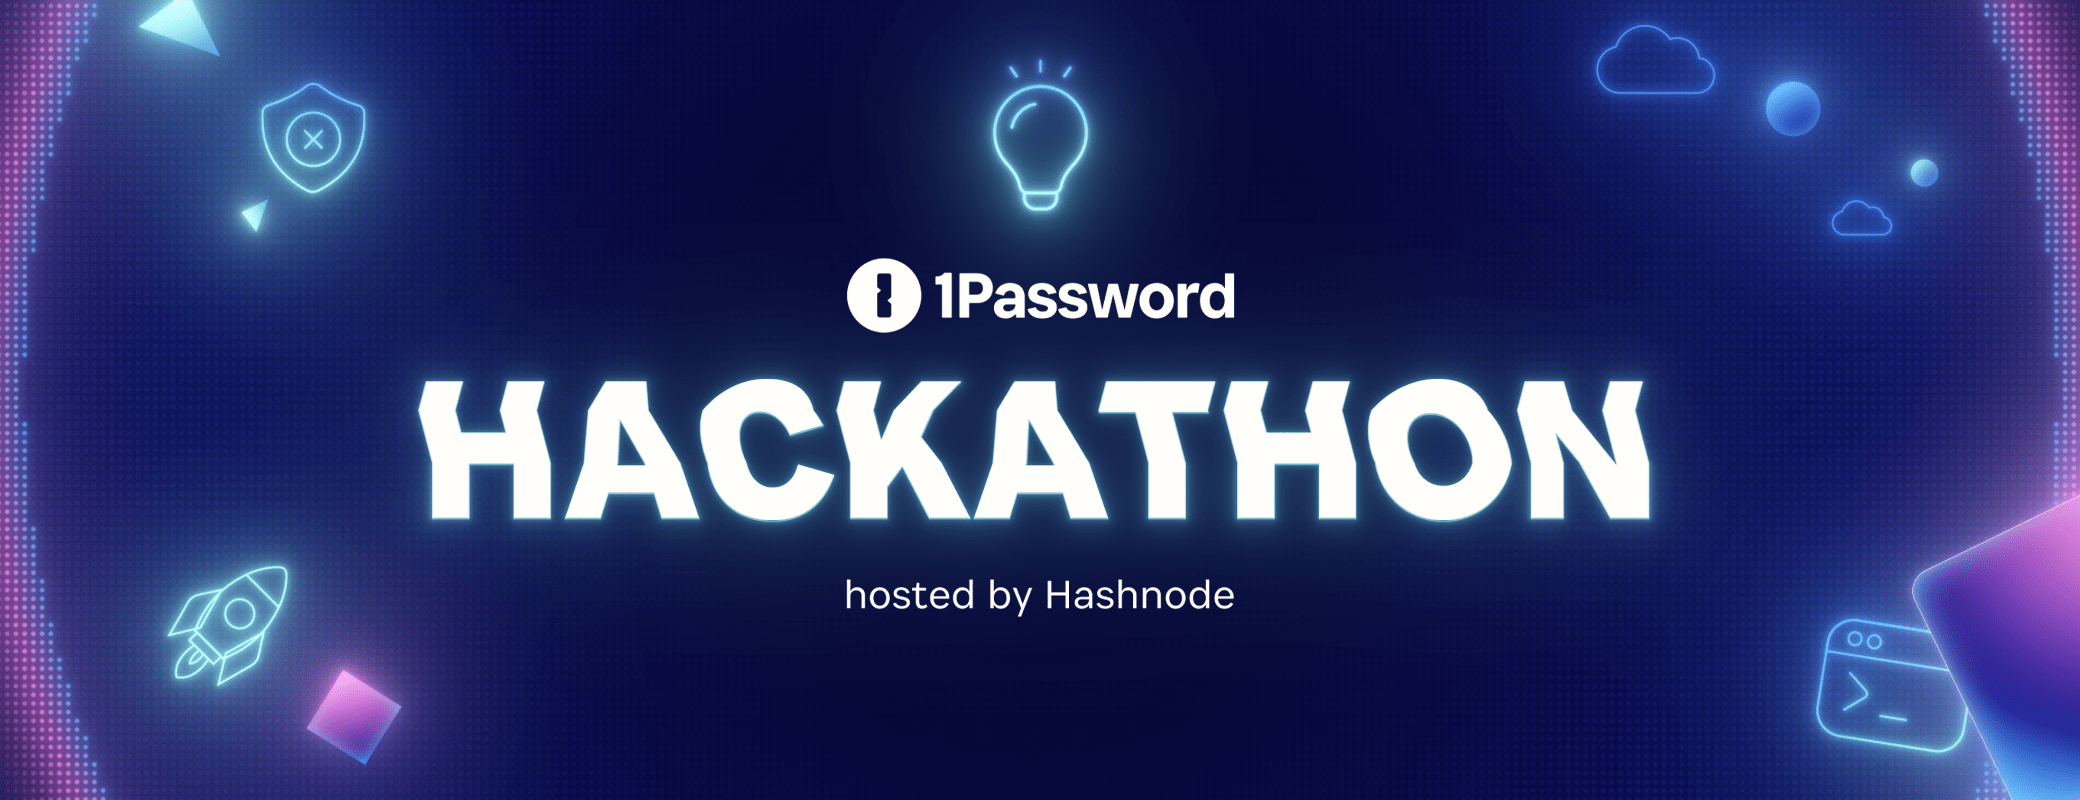 Congratulations to the 1Password Hackathon winners! 🏆